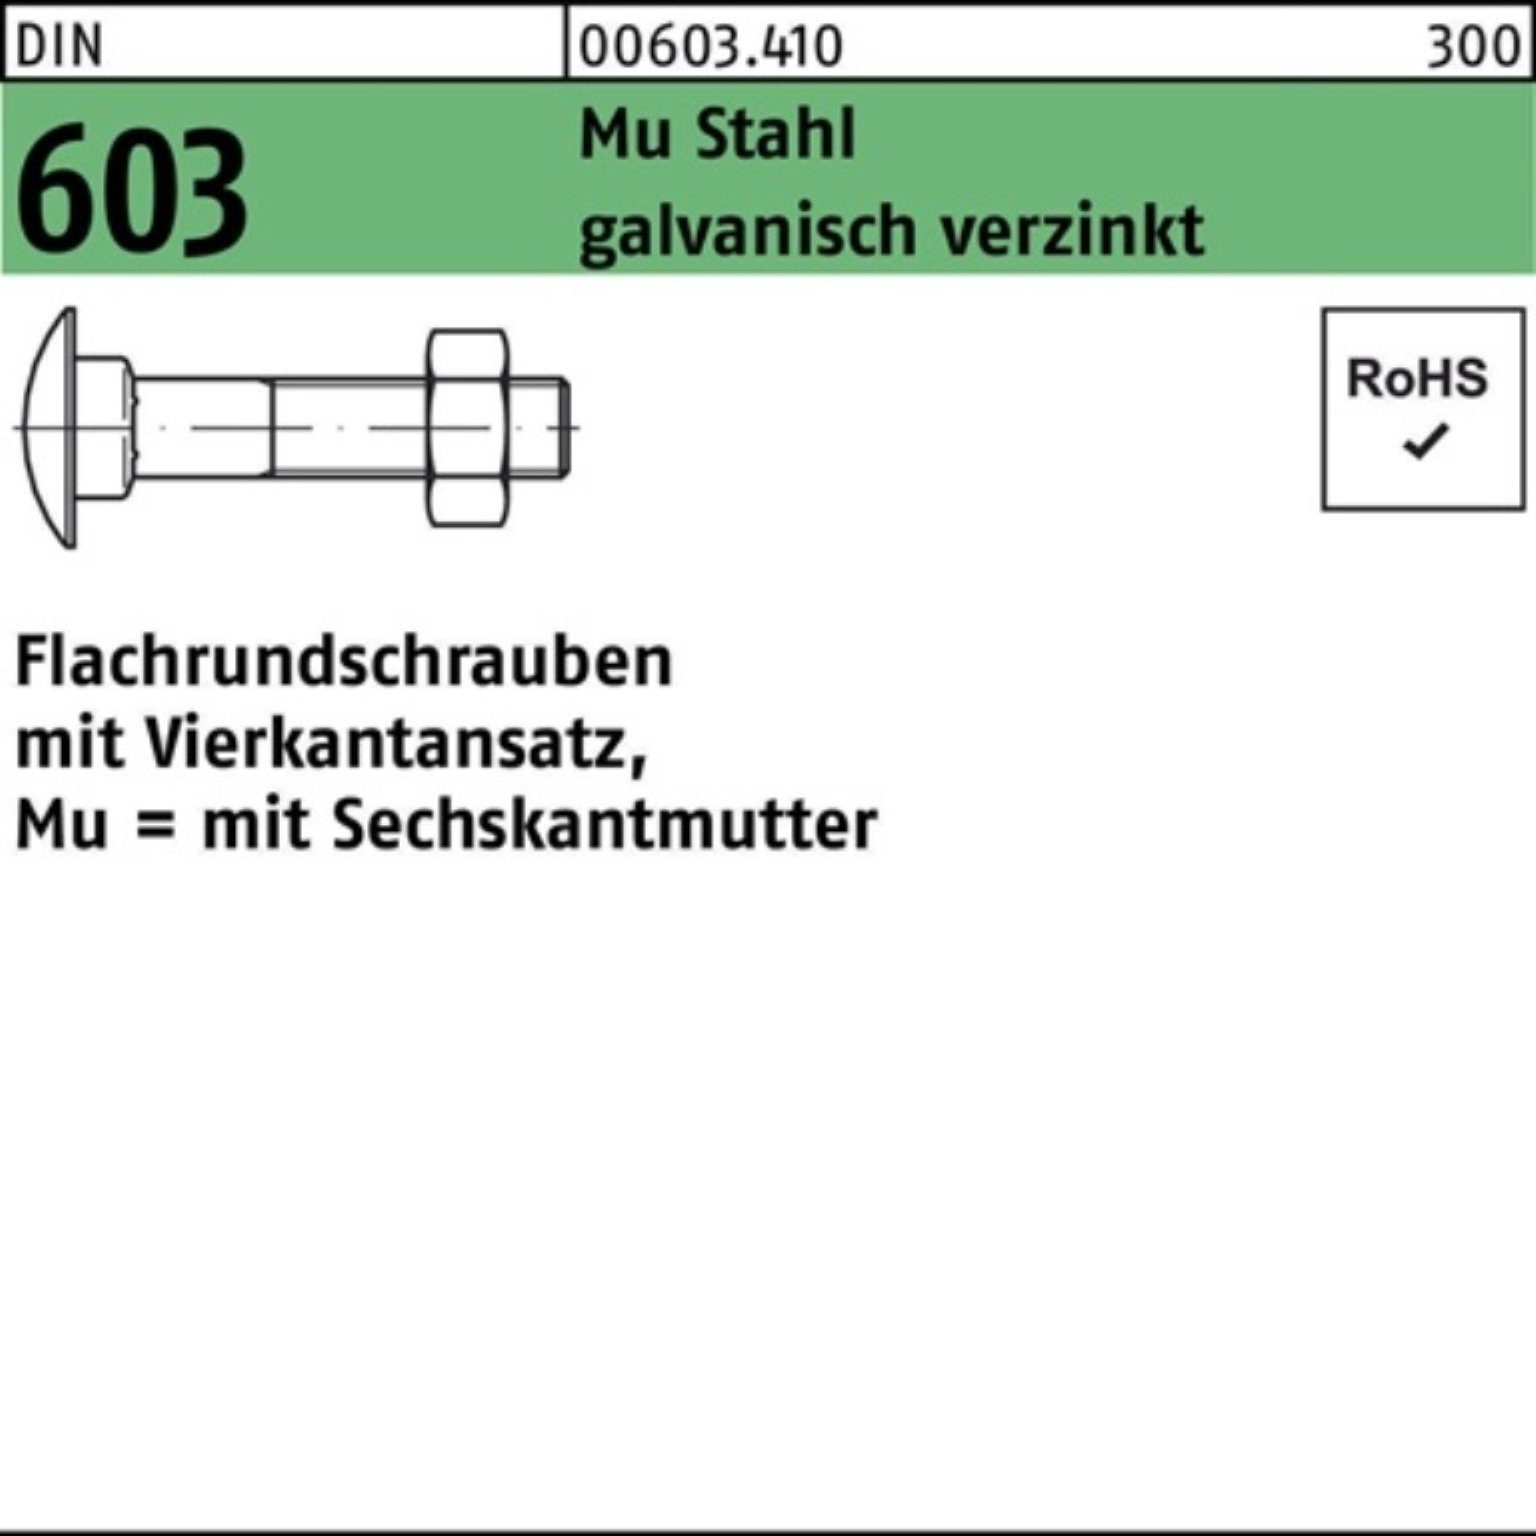 100er Vierkantansatz/6-ktmutter M16x35 Pack Reyher Schraube Flachrundschraube DIN 603